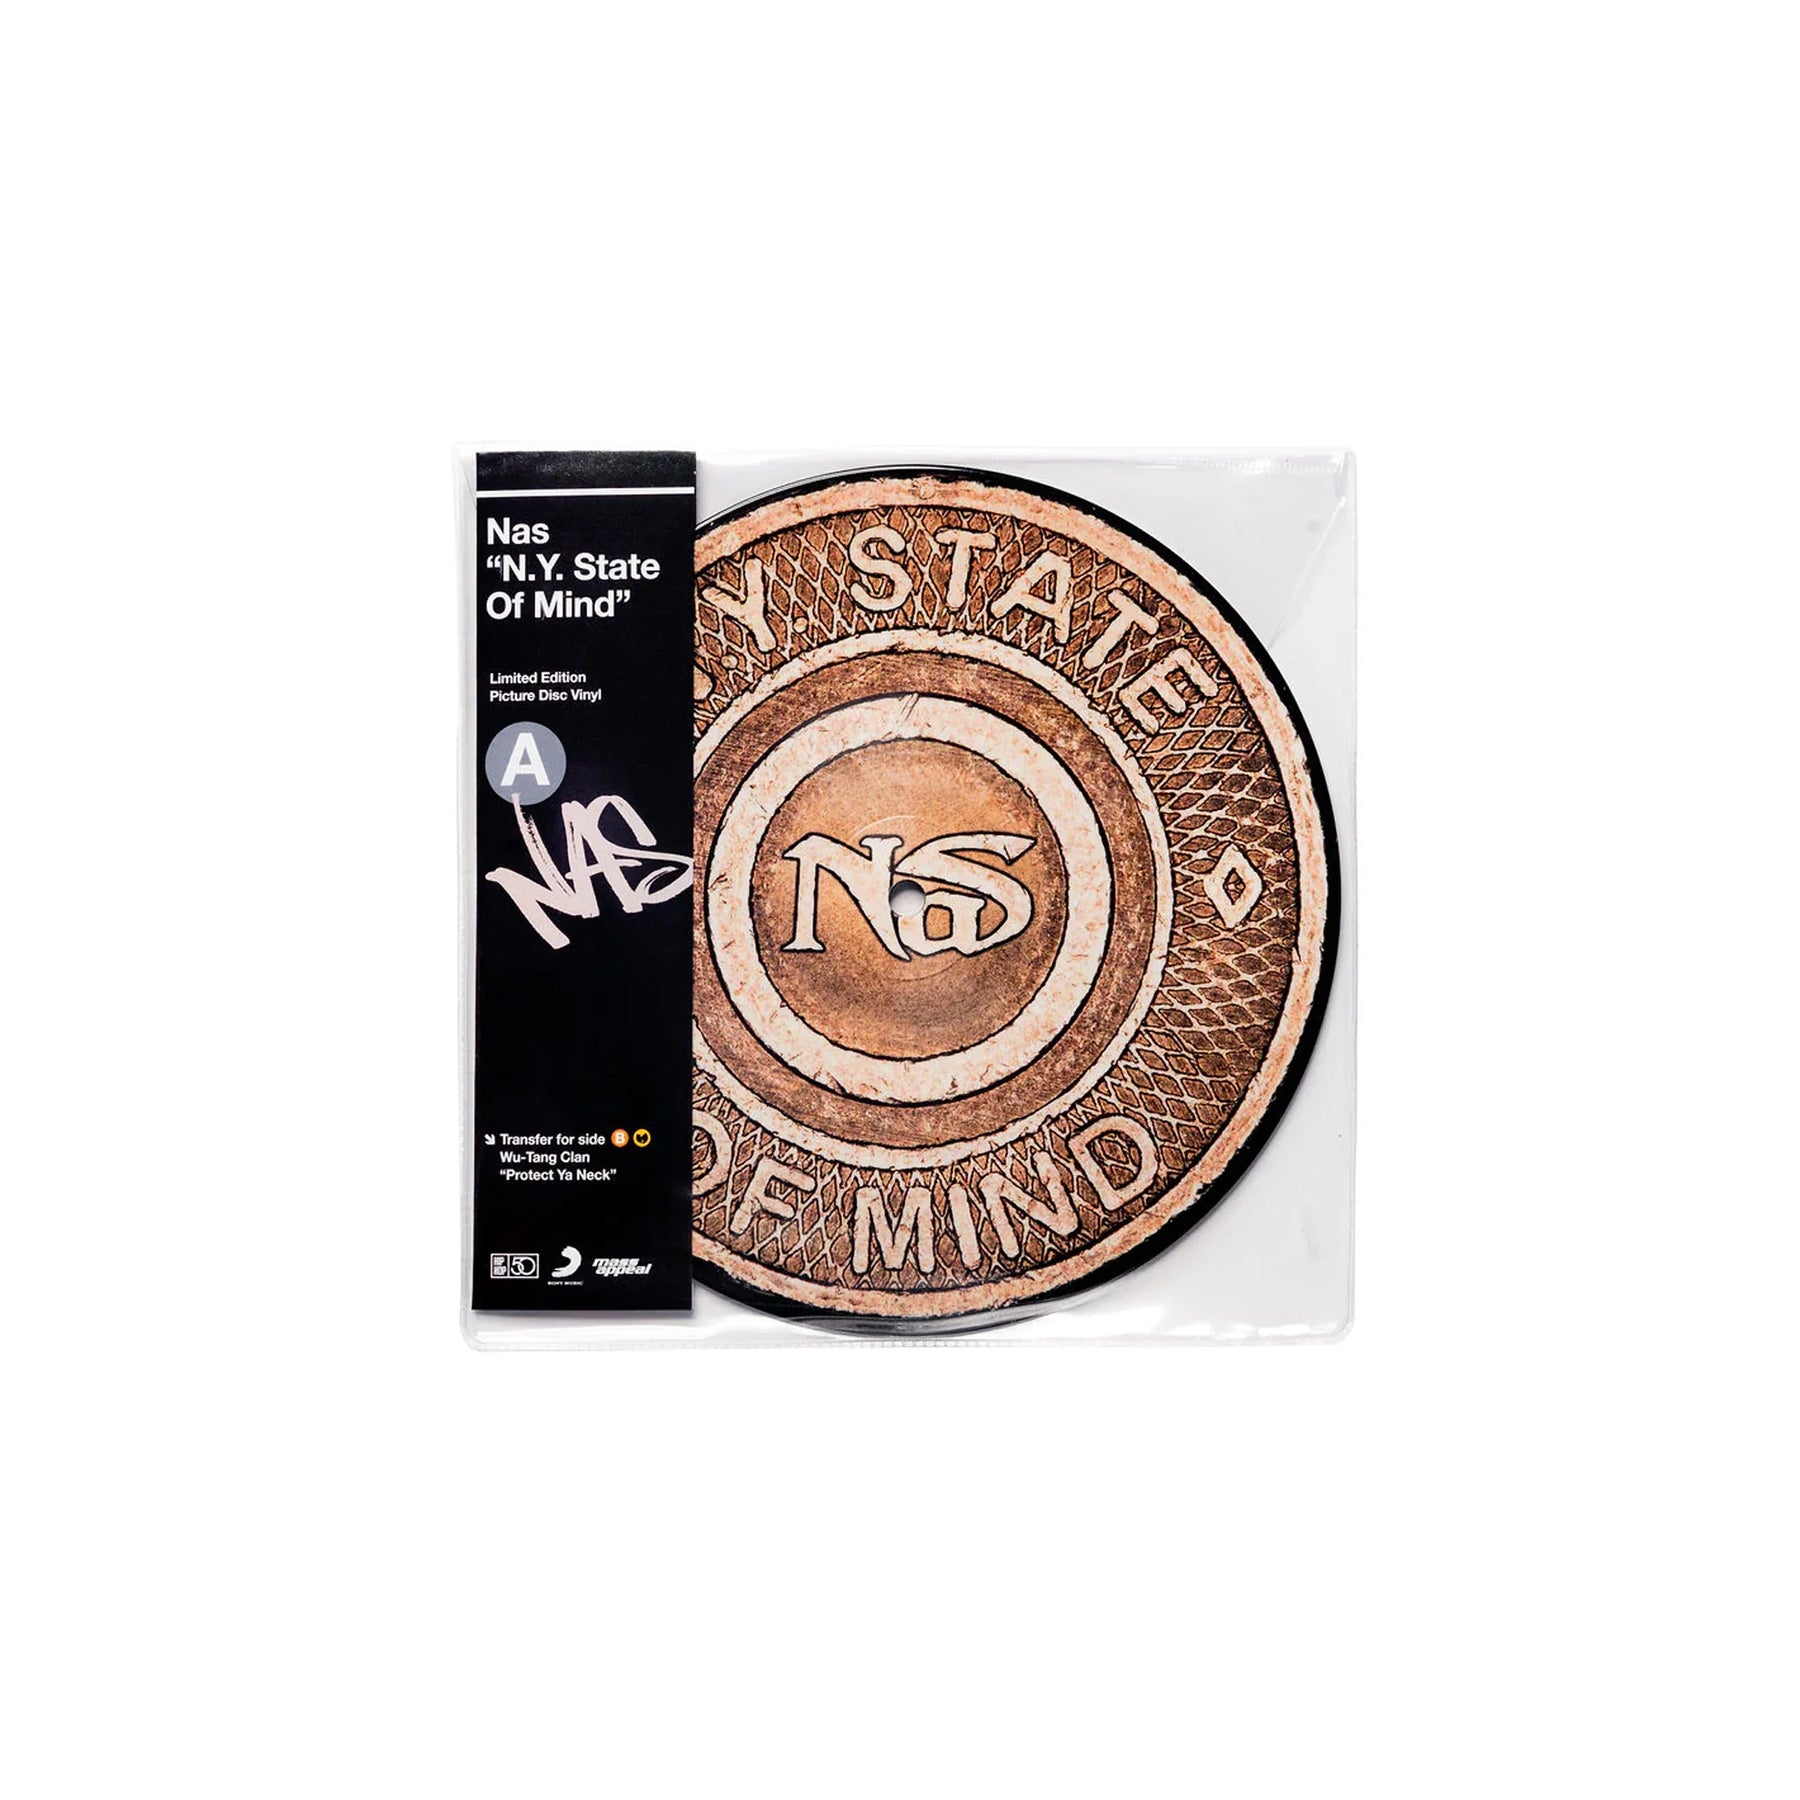 Nas - N.Y. State of Mind b/w Wu-Tang Clan - Protect Ya Neck (Pic Disc)